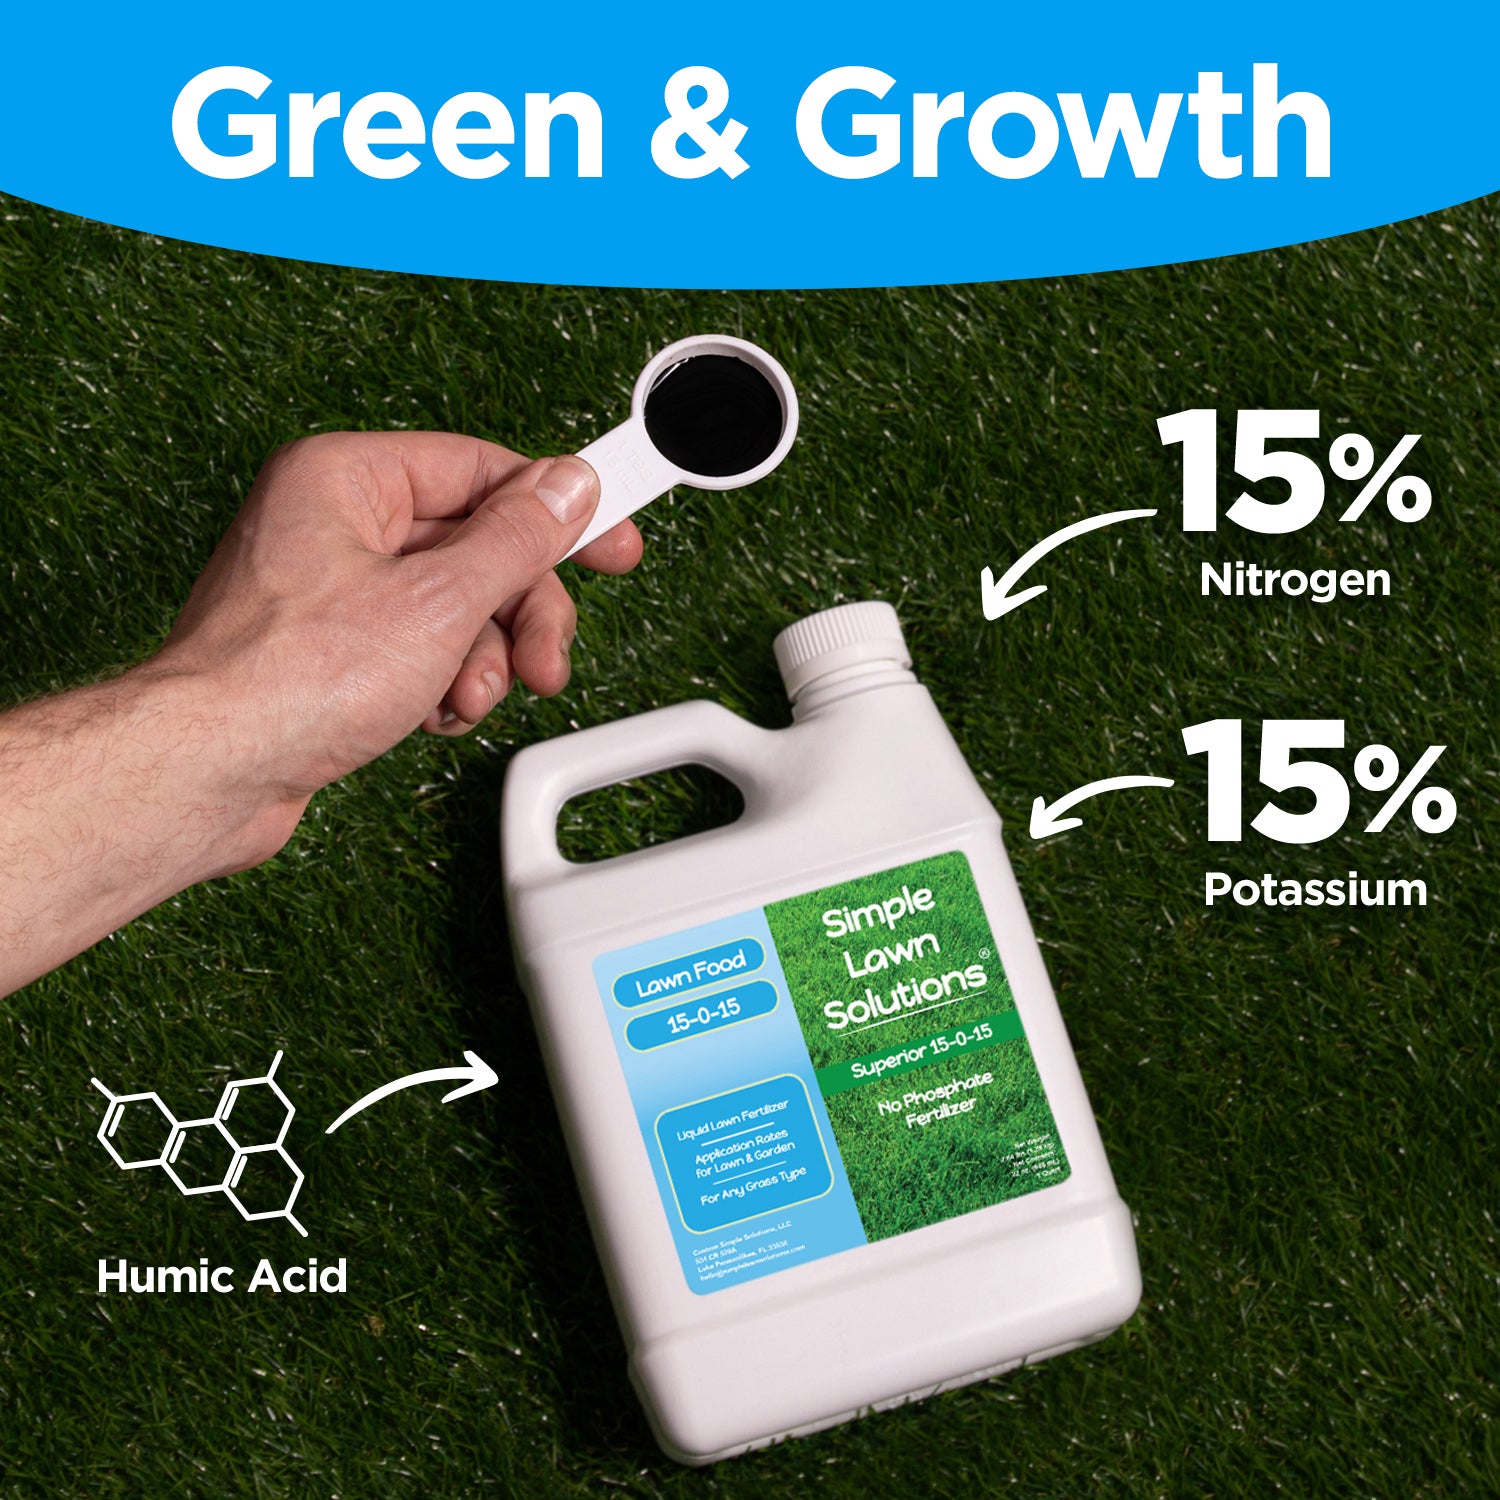 Phosphorus free fertilizer contains 15% nitrogen and 15% potassium with humic acid